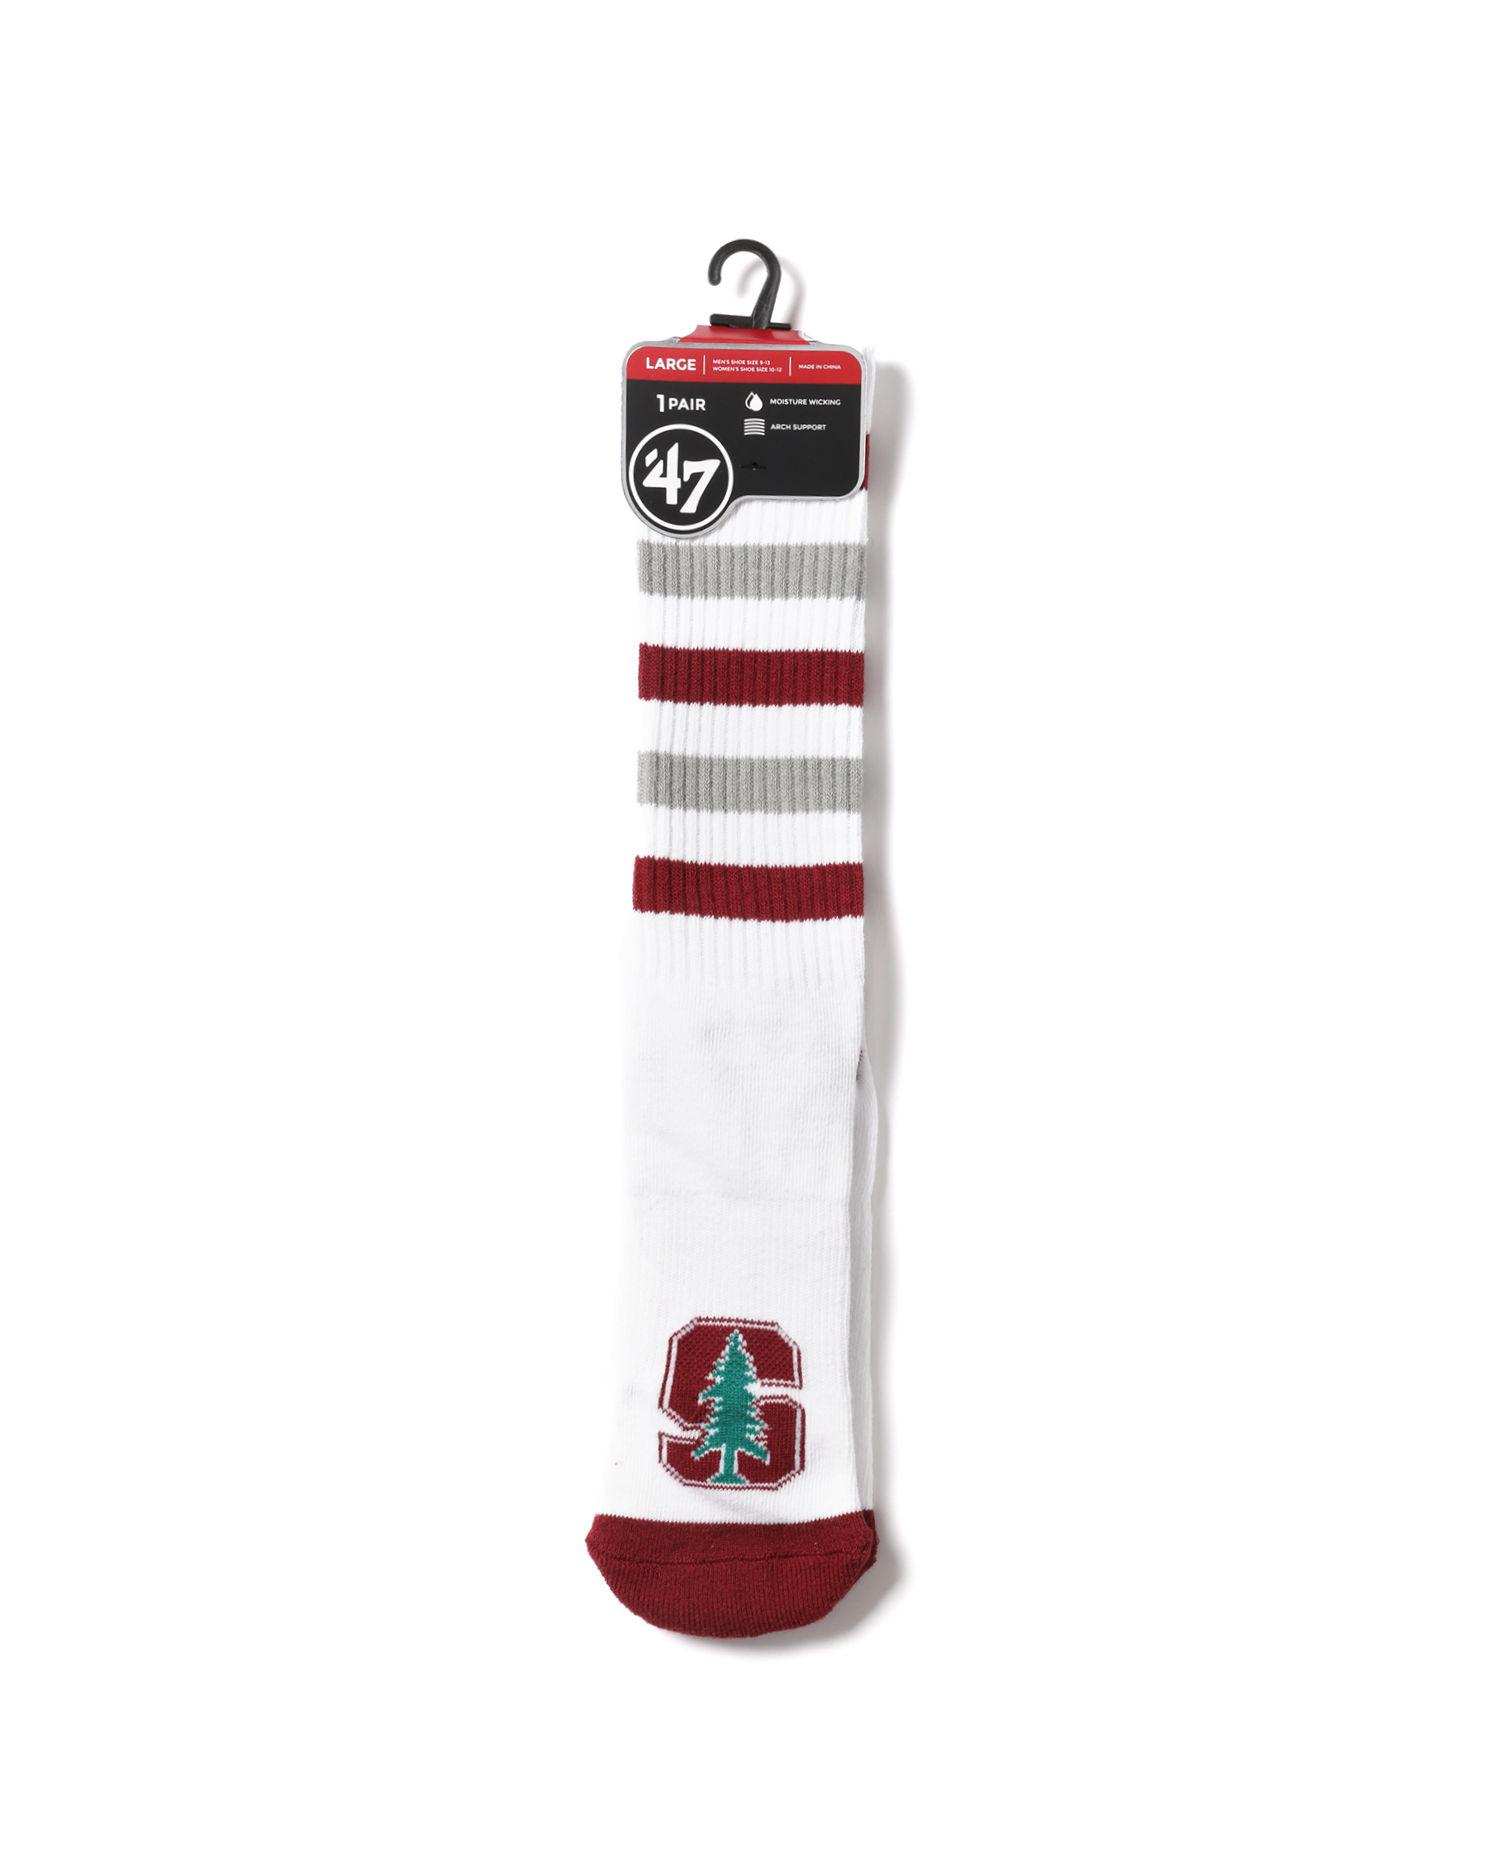 Stanford Cardinal stripe socks by '47